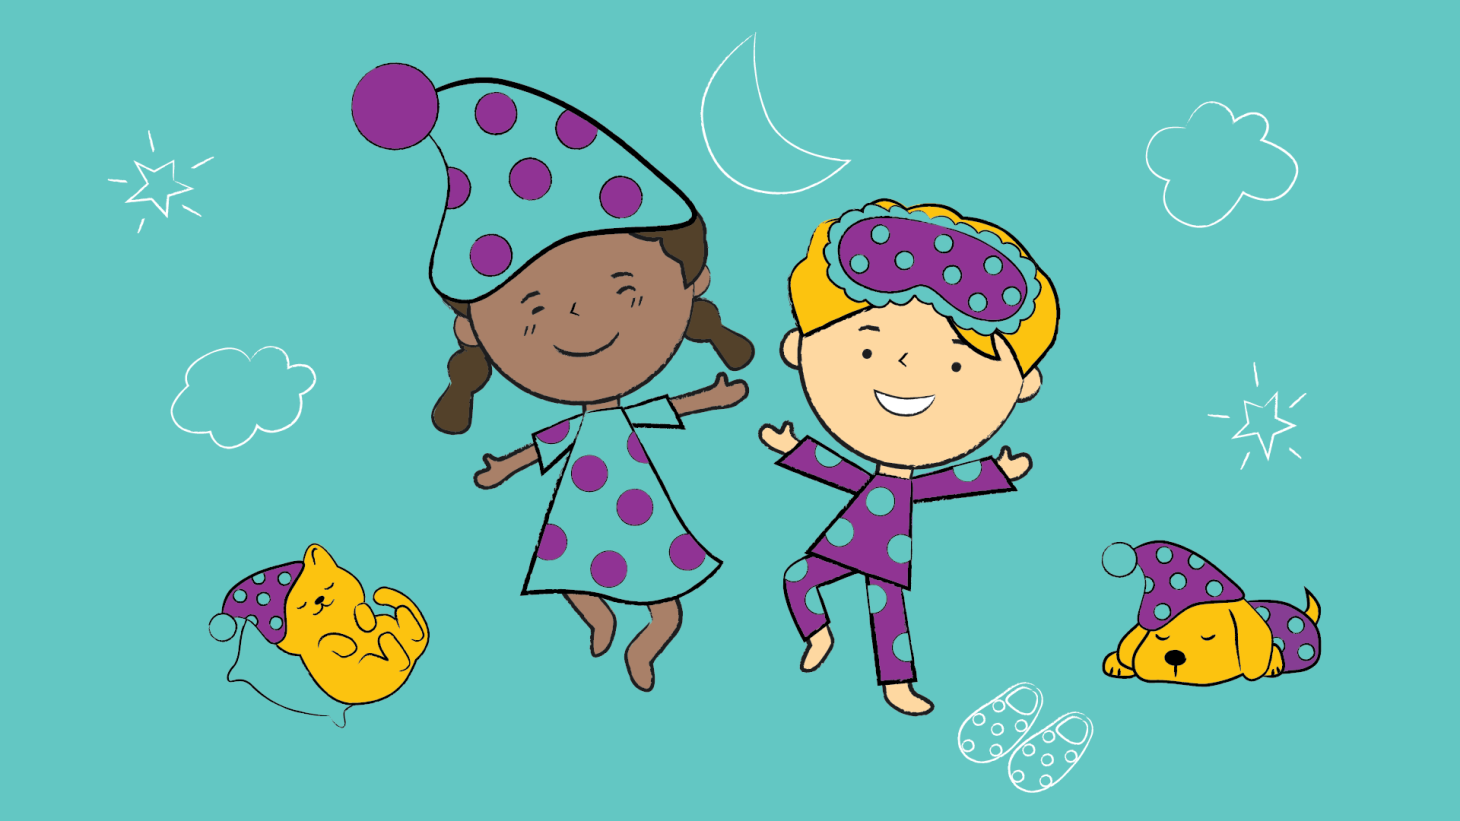 Illustration of a boy, a girl, a dog and teddy bear in pyjamas